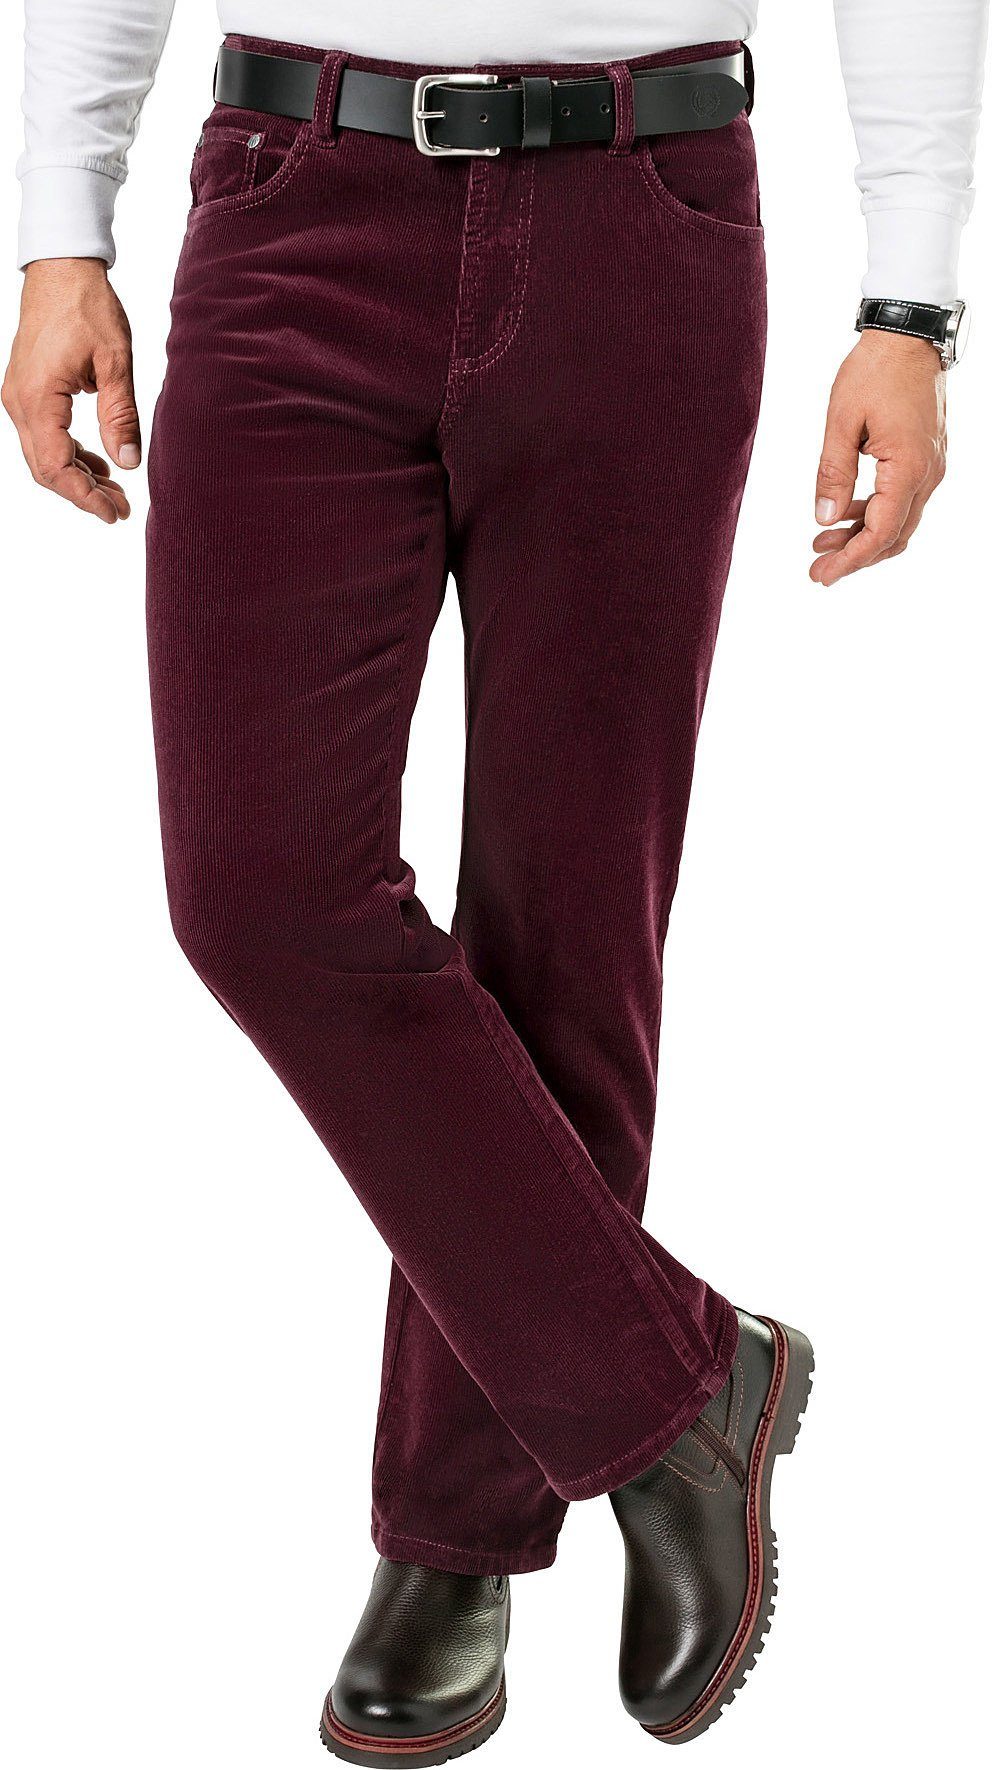 Franco Bettoni Cordhose bequeme Stretchcord-Jeans mit nobler Samt-Optik